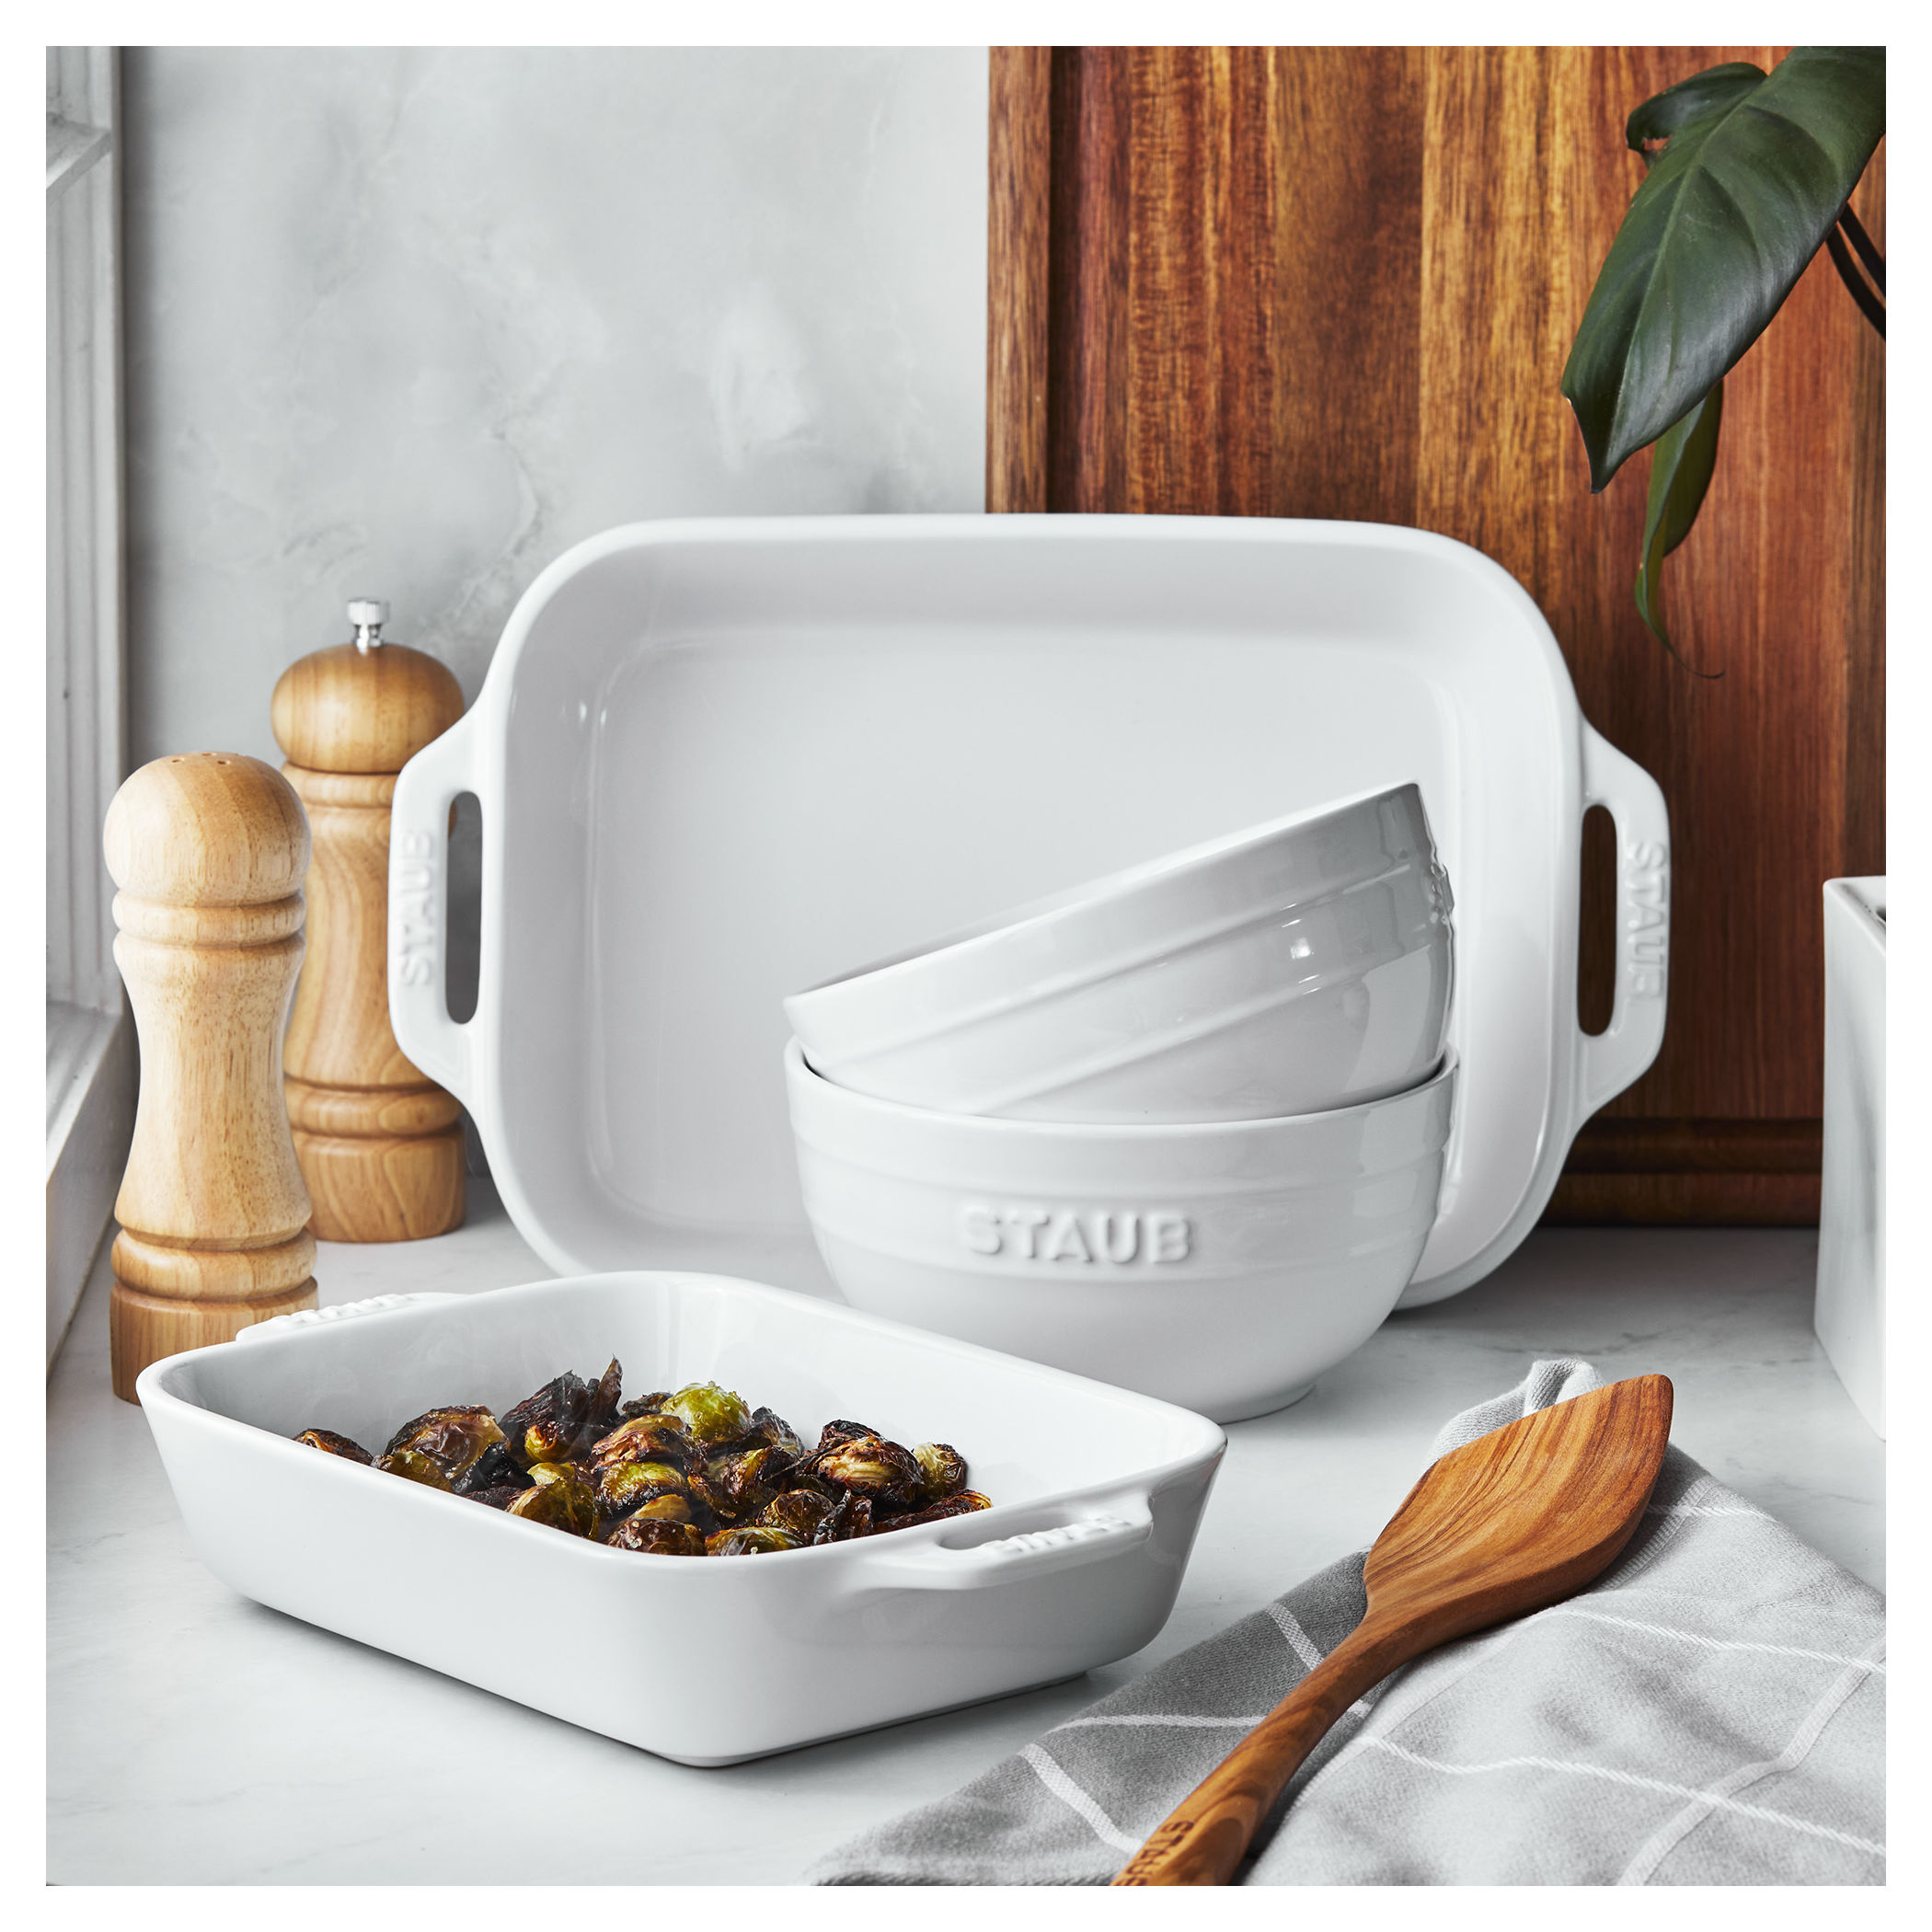 Buy Staub Ceramic Bakeware set